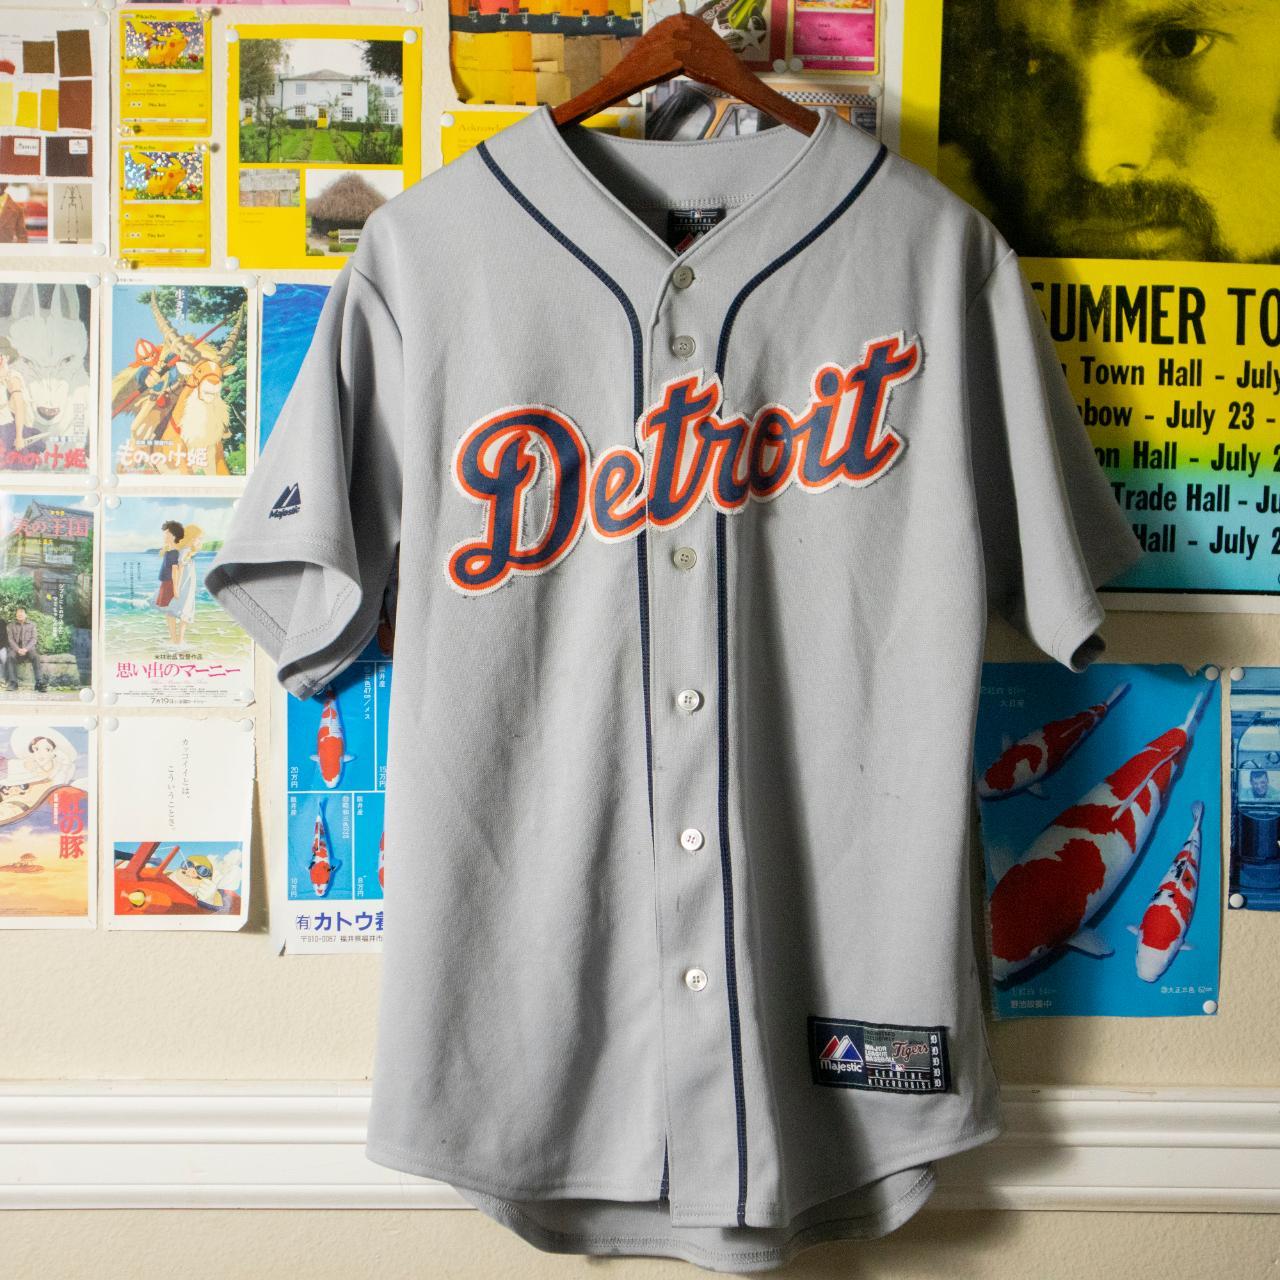 Men's Medium Detroit Tigers Majestic Shirt